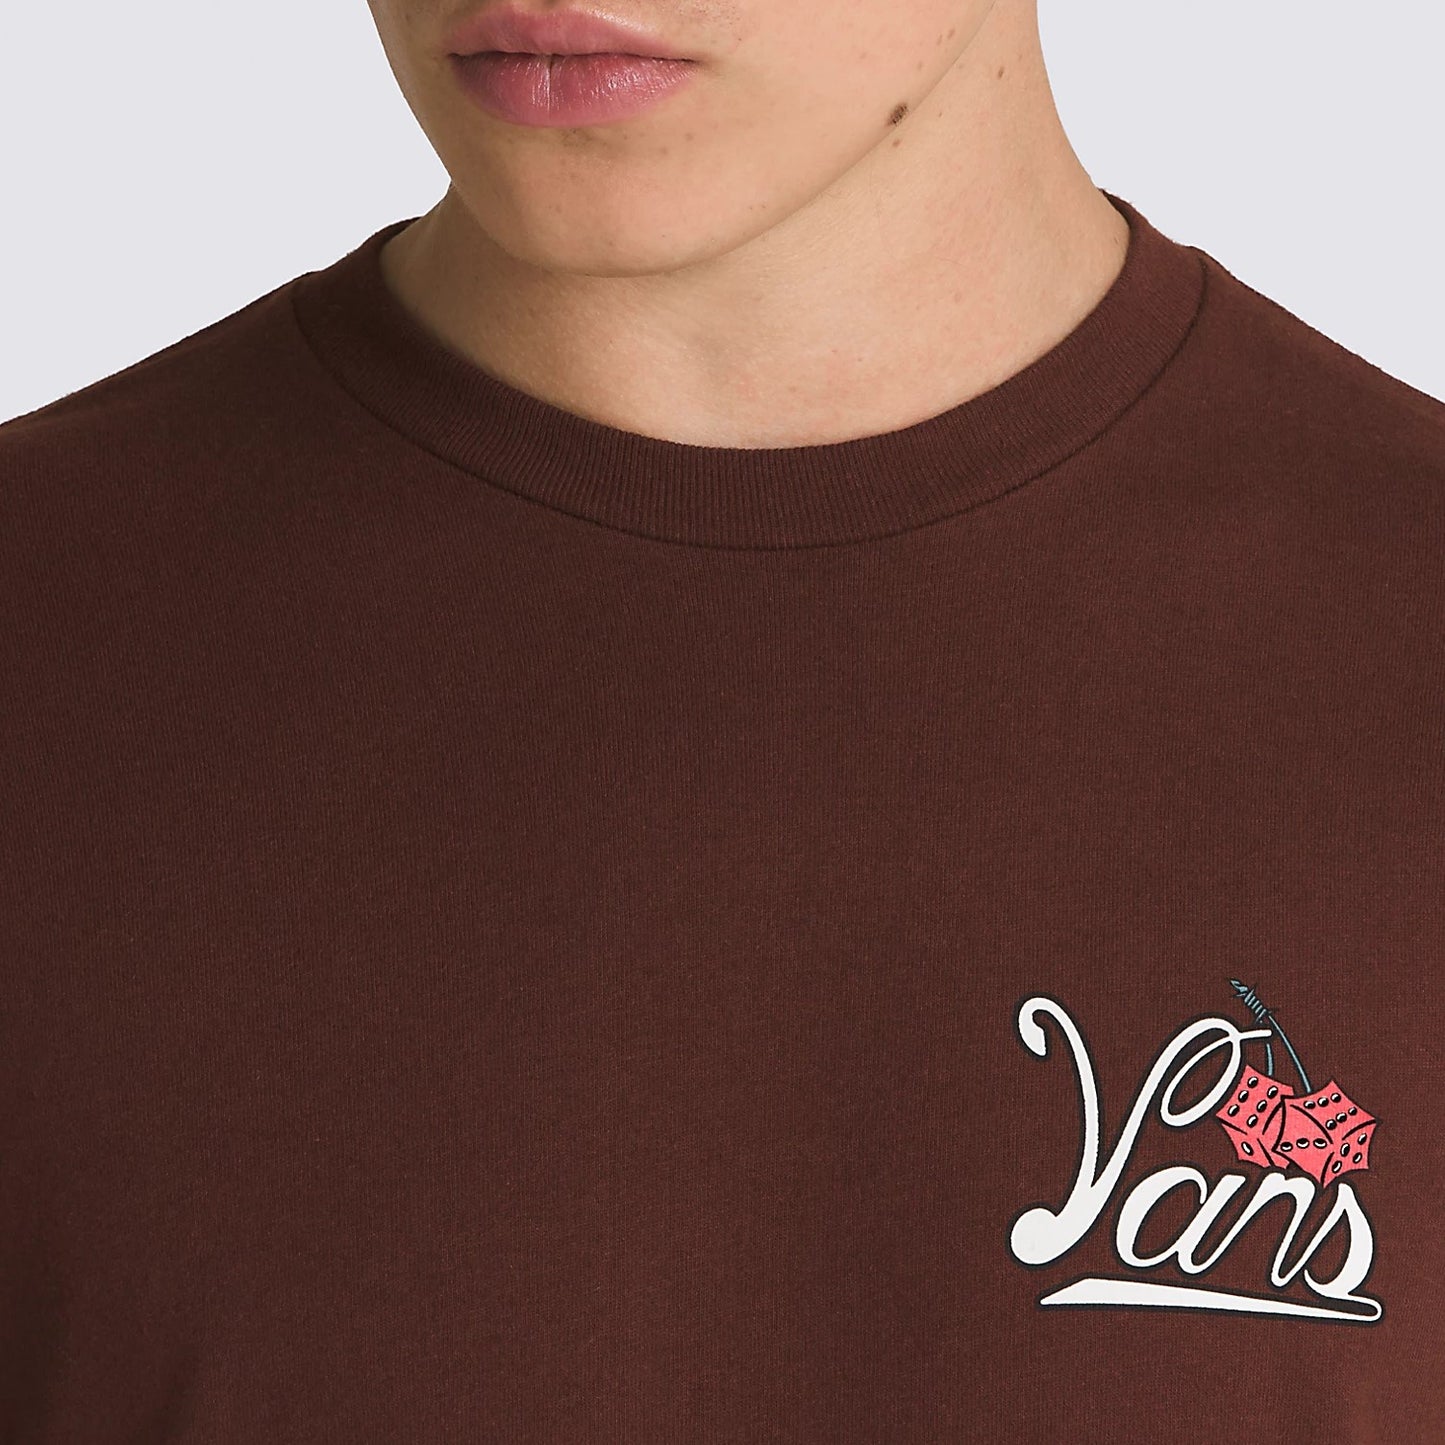 VANS Hot Box Cars T-Shirt